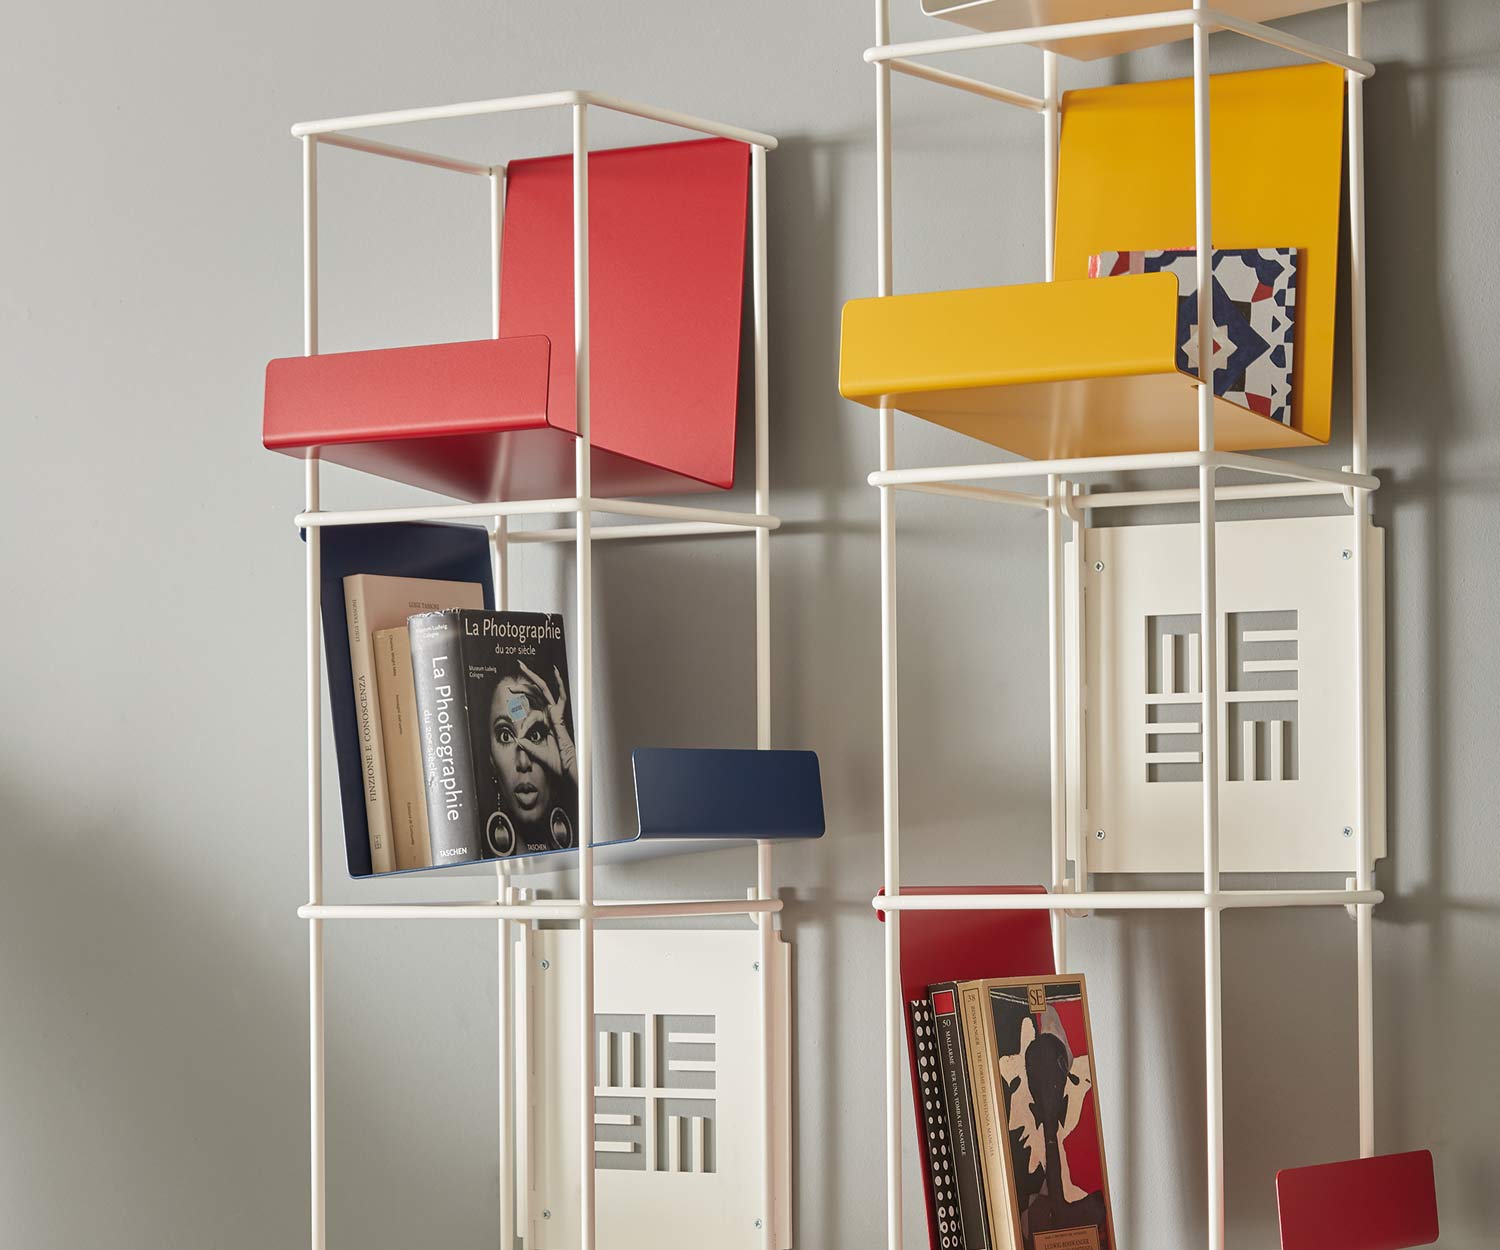 Libreria verticale a parete dal design moderno MEME Libro